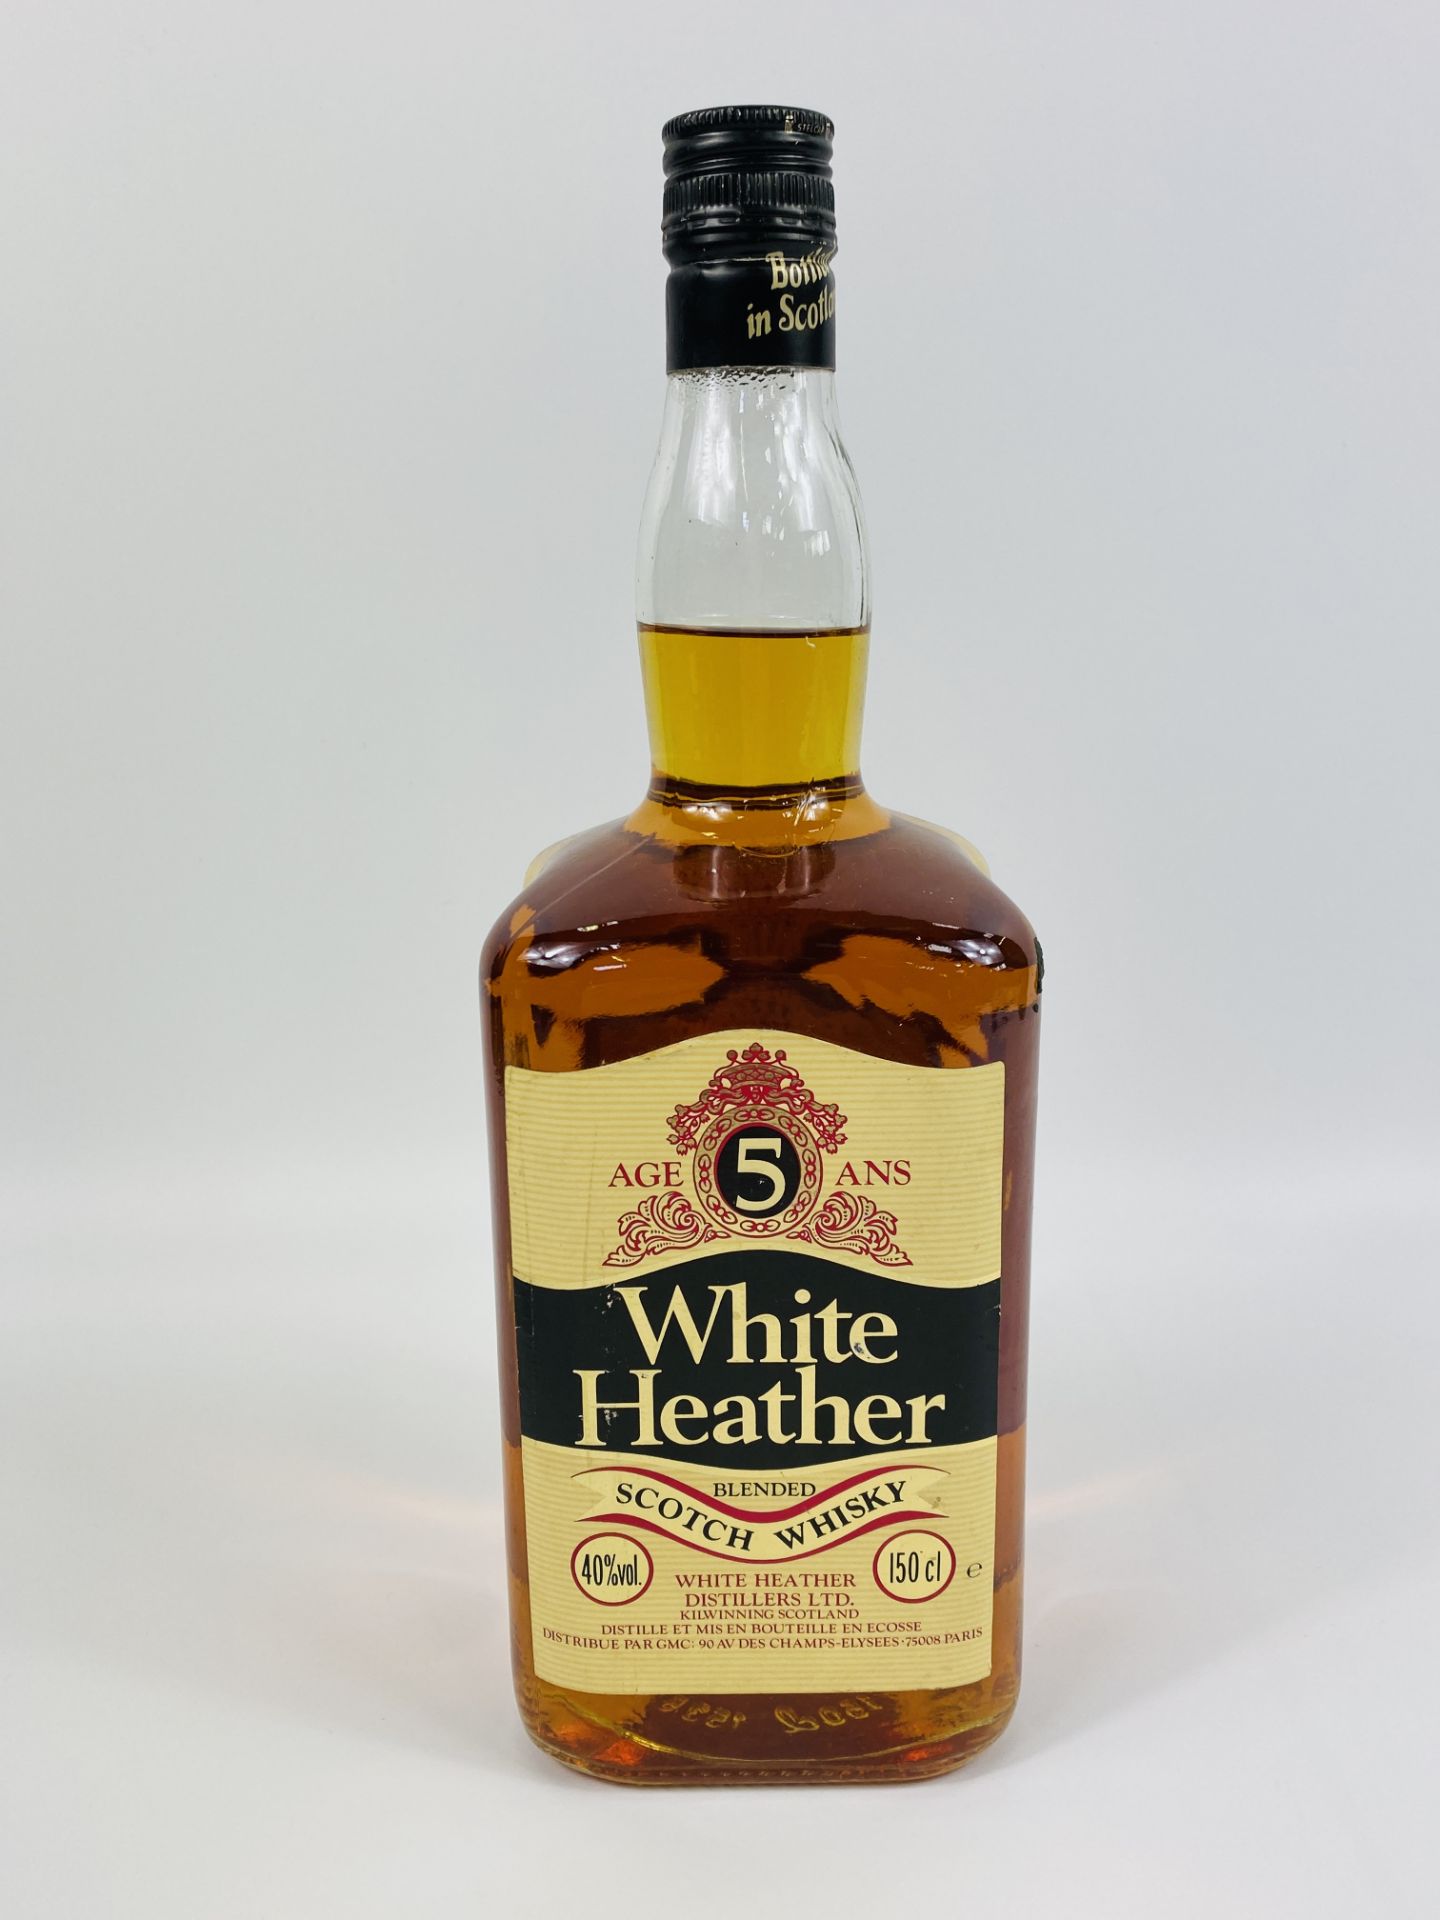 75cl bottle of Glenfiddich pure malt Scotch whisky; 150cl bottle of White Heather Scotch whisky - Image 4 of 5